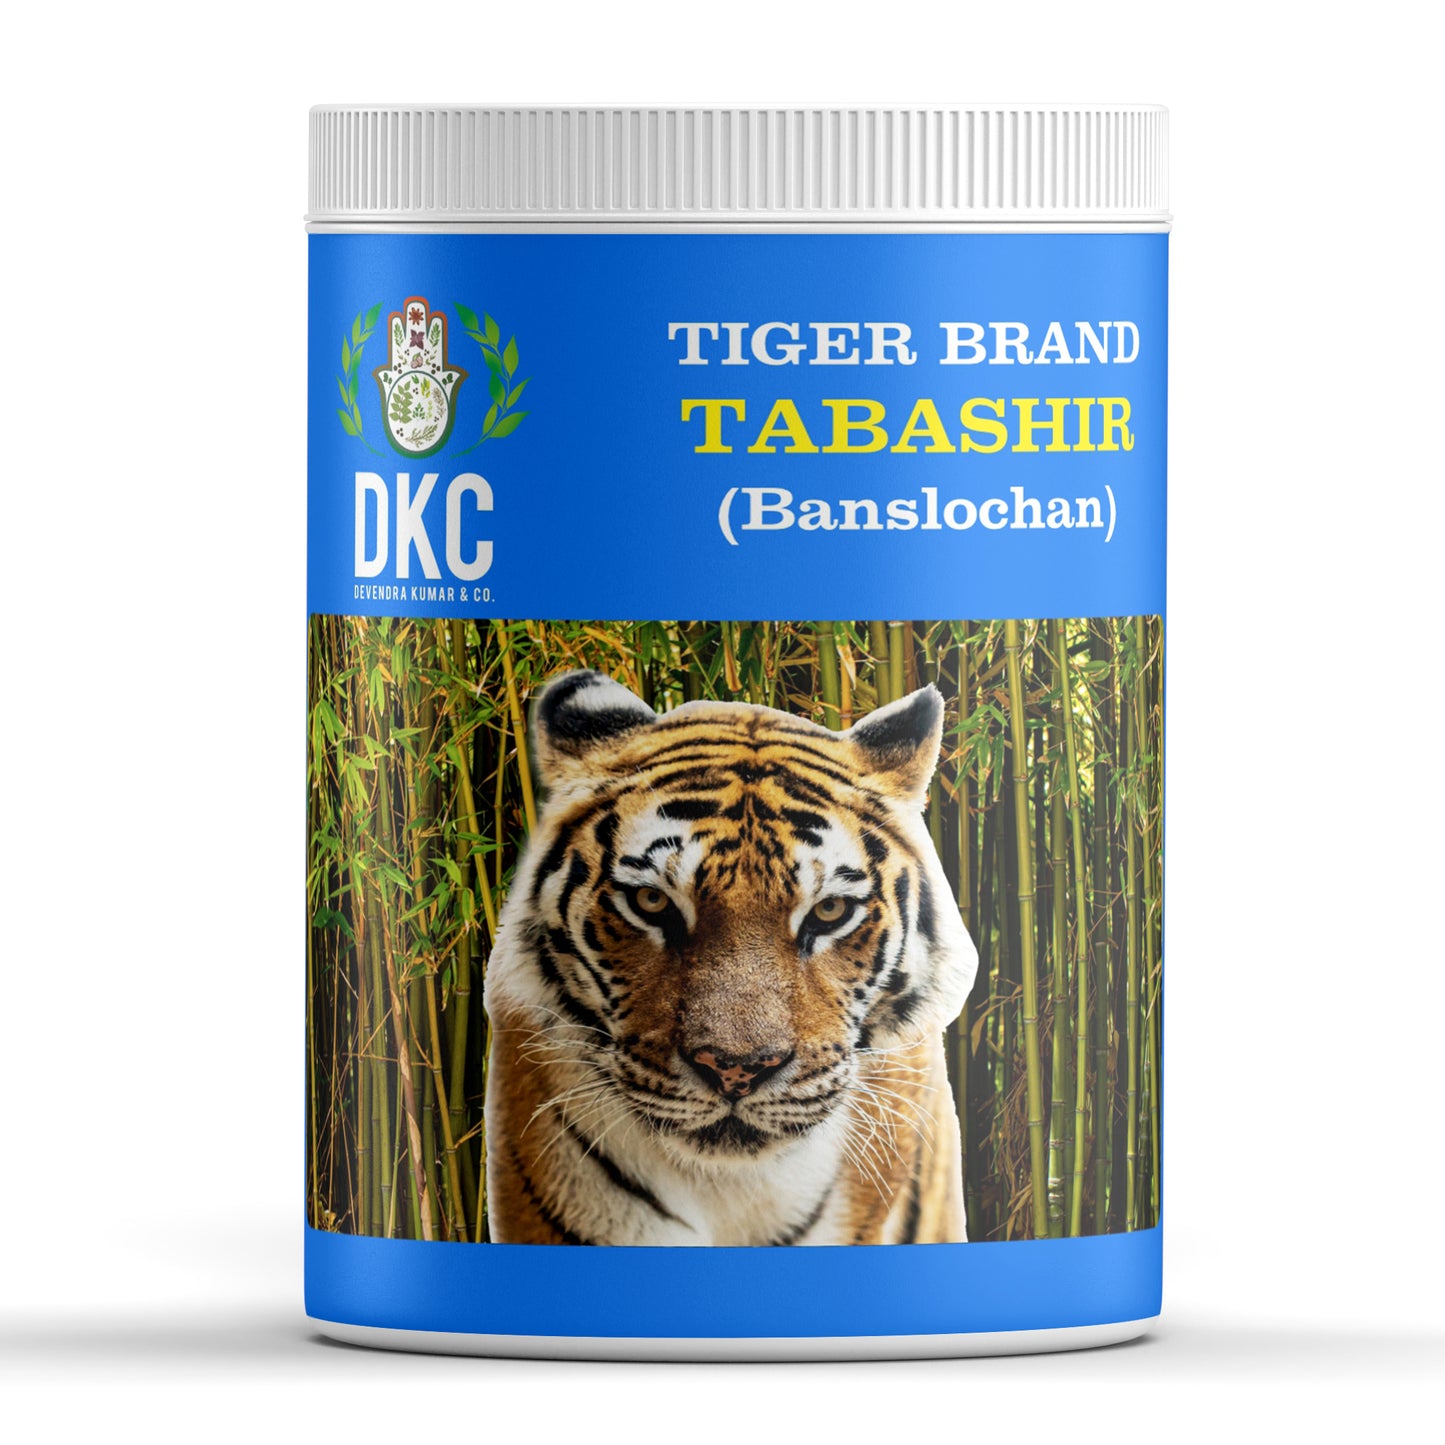 Tabashir - Vanslochan - Banslochan (Tiger Brand)